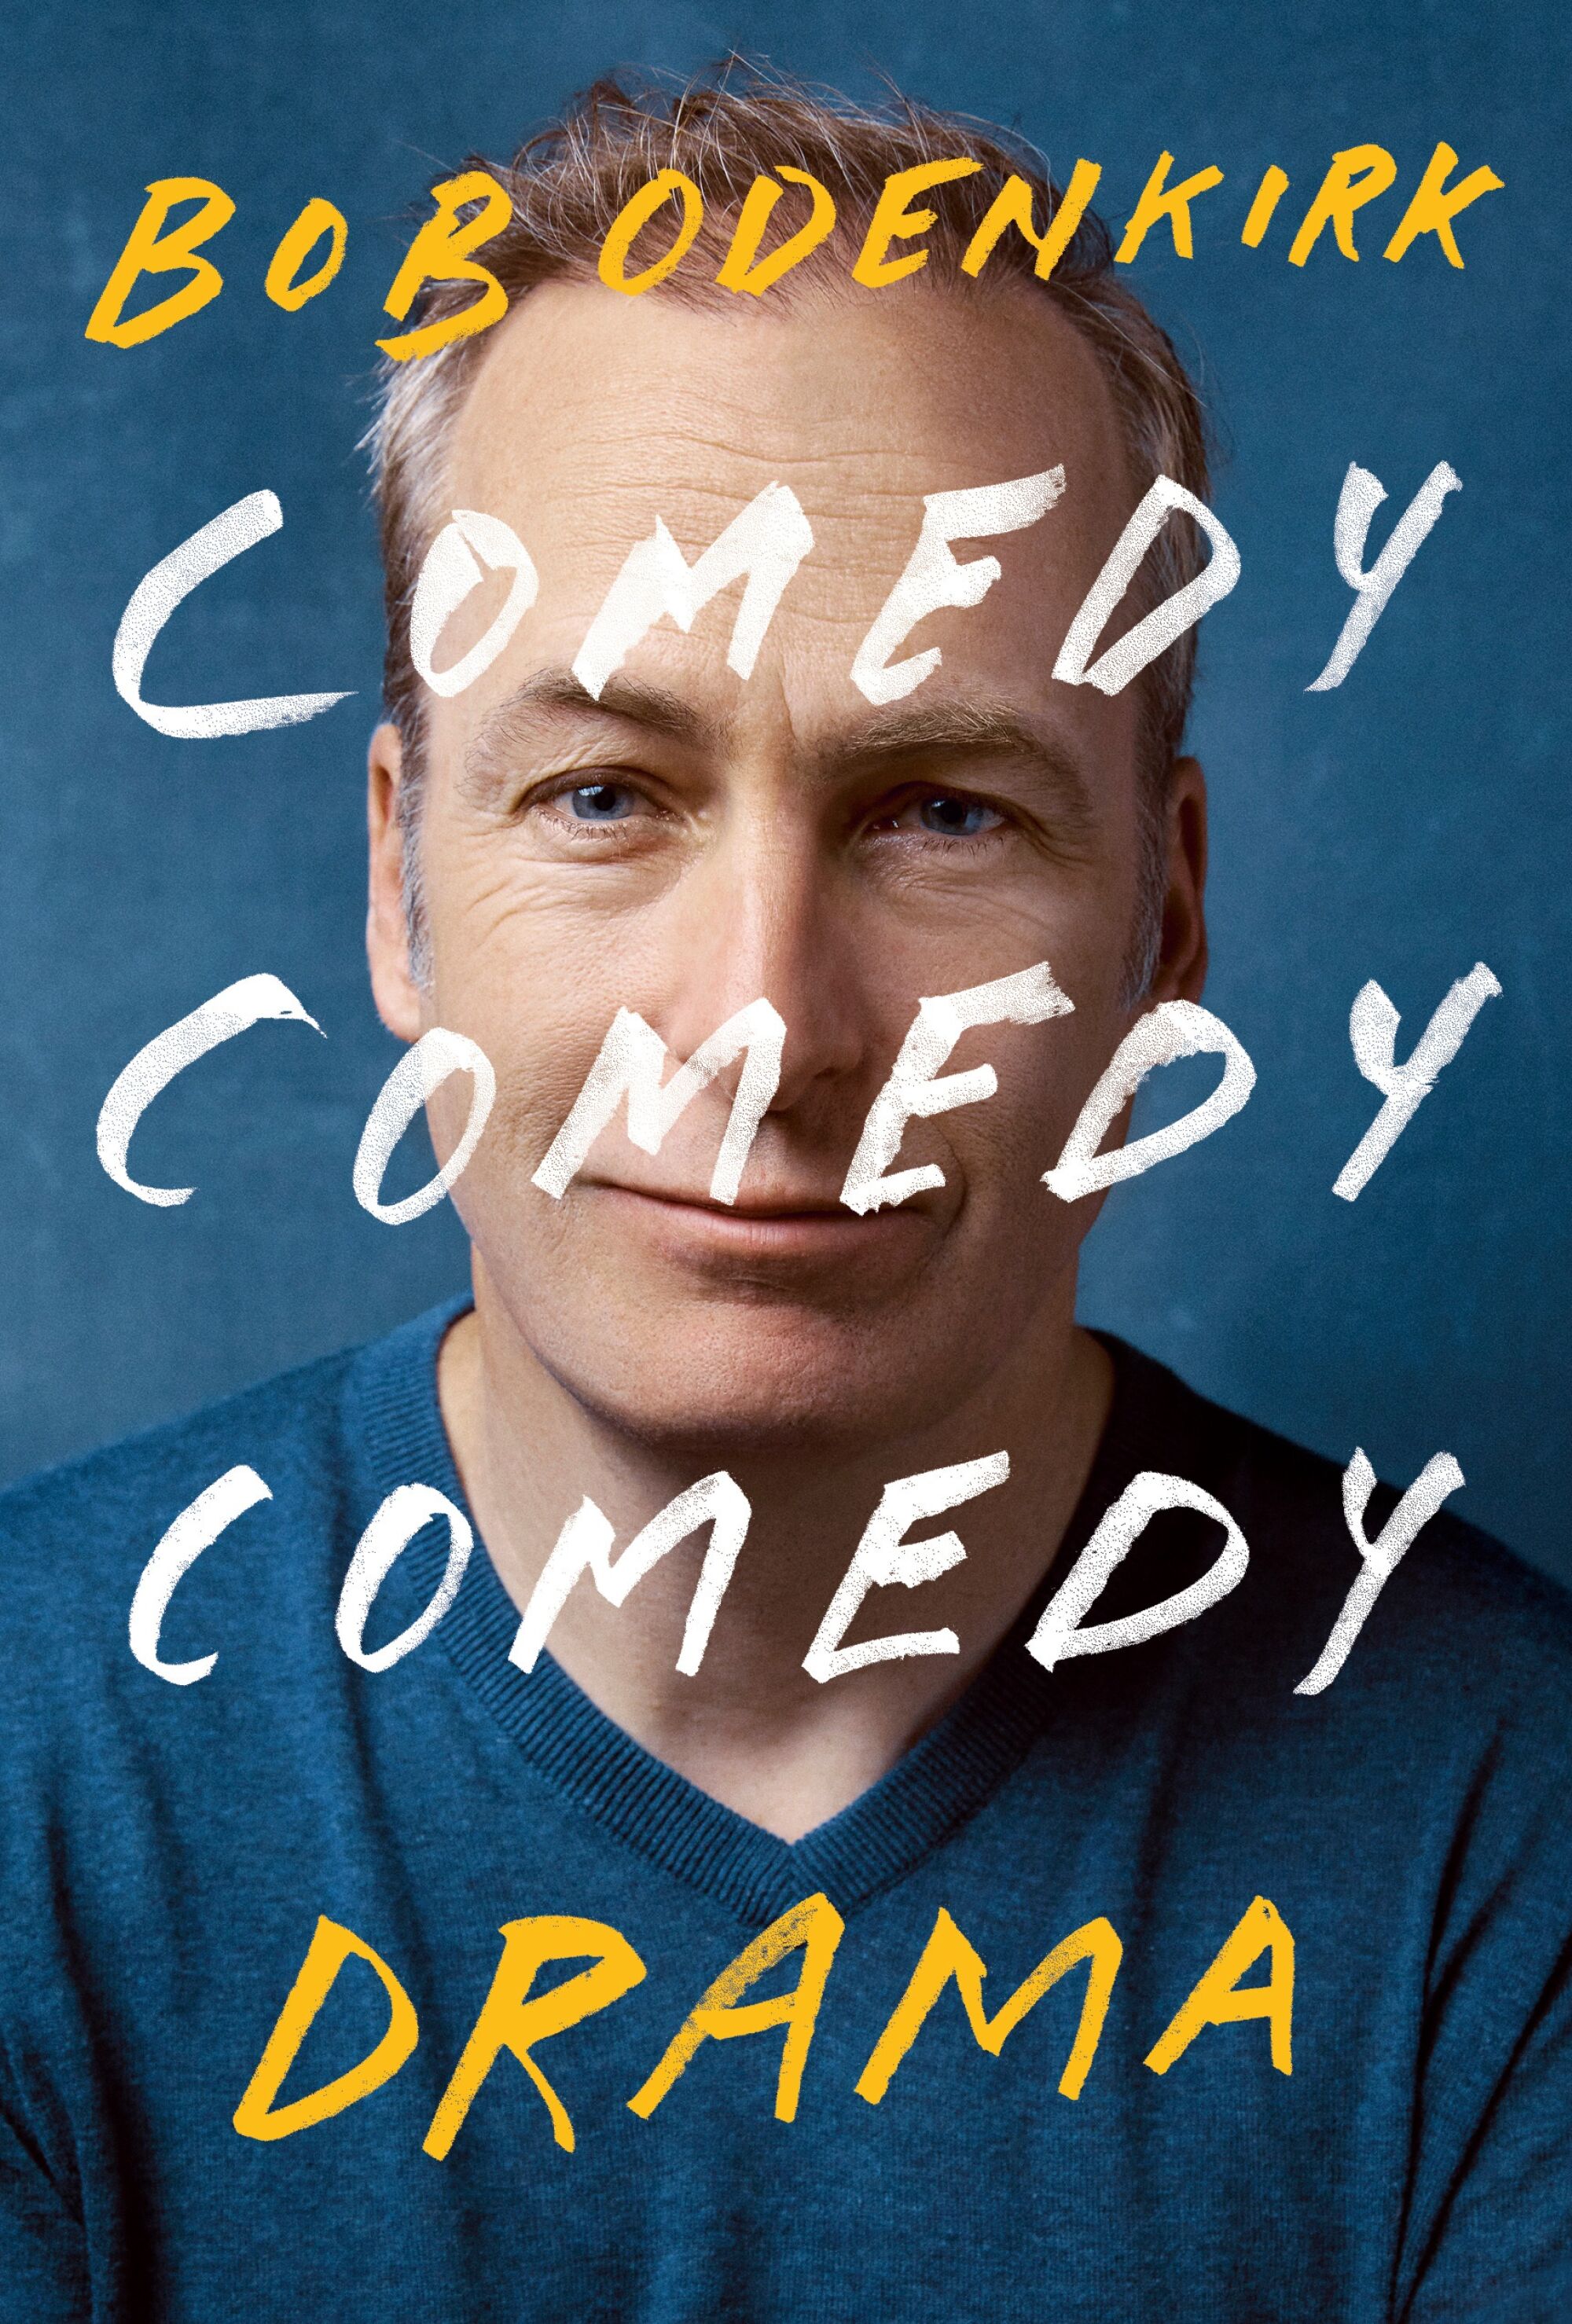 'Comedy Comedy Comedy Drama," by Bob Odenkirk